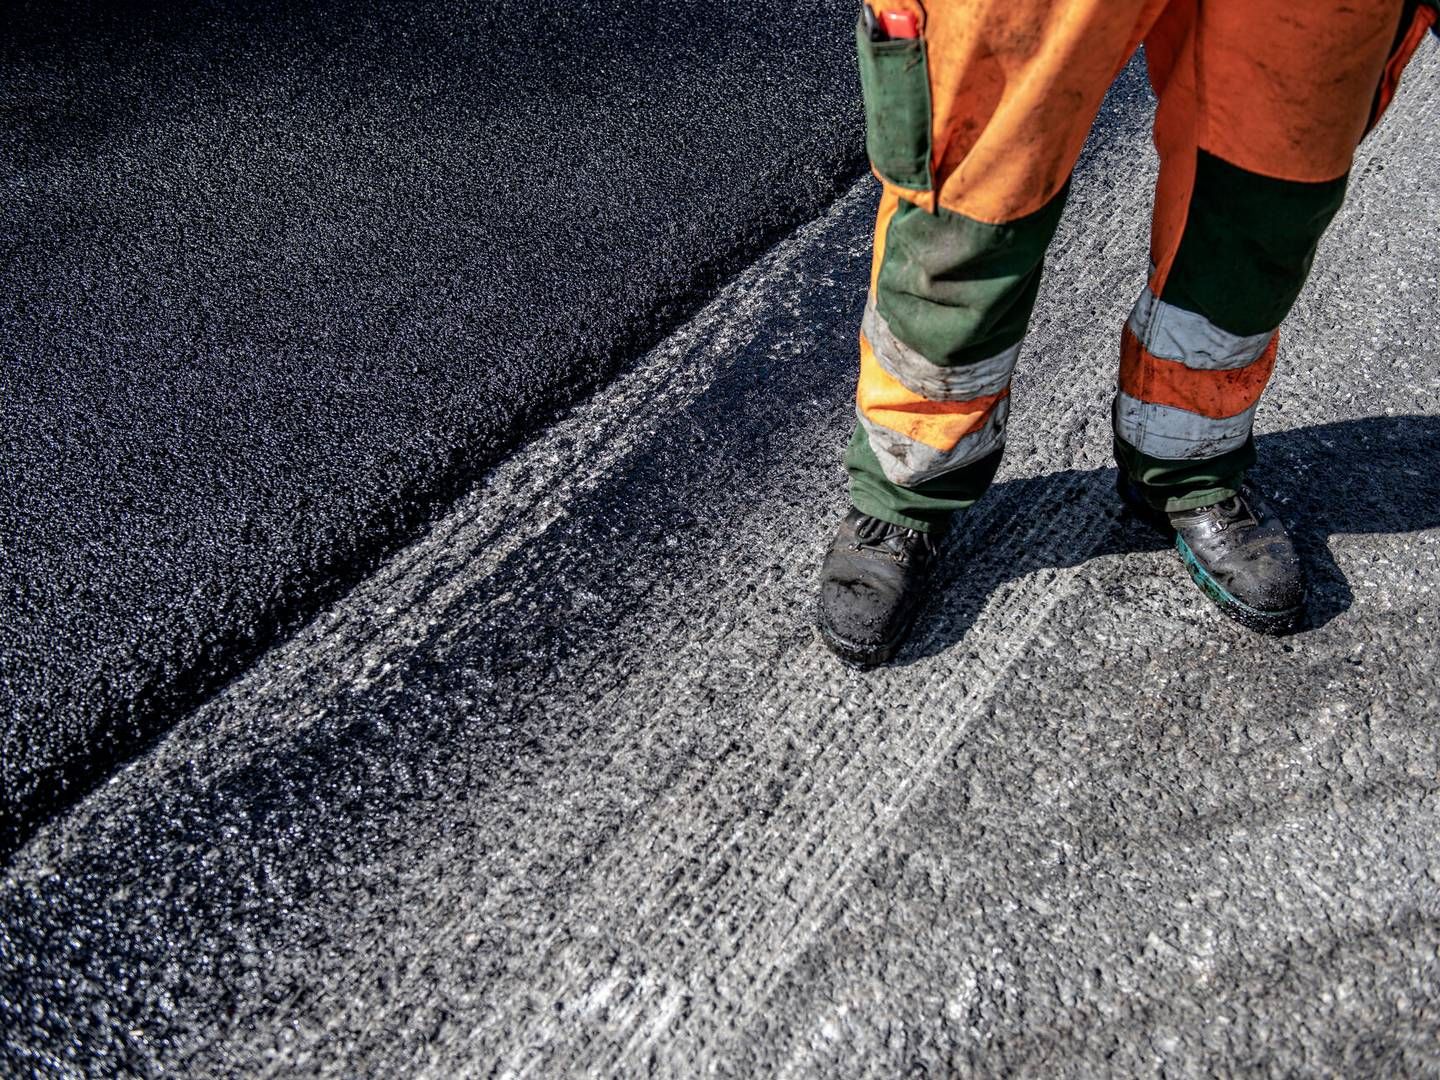 Arkil lægger blandt andet asfalt. | Foto: Casper Dalhoff/Ritzau Scanpix